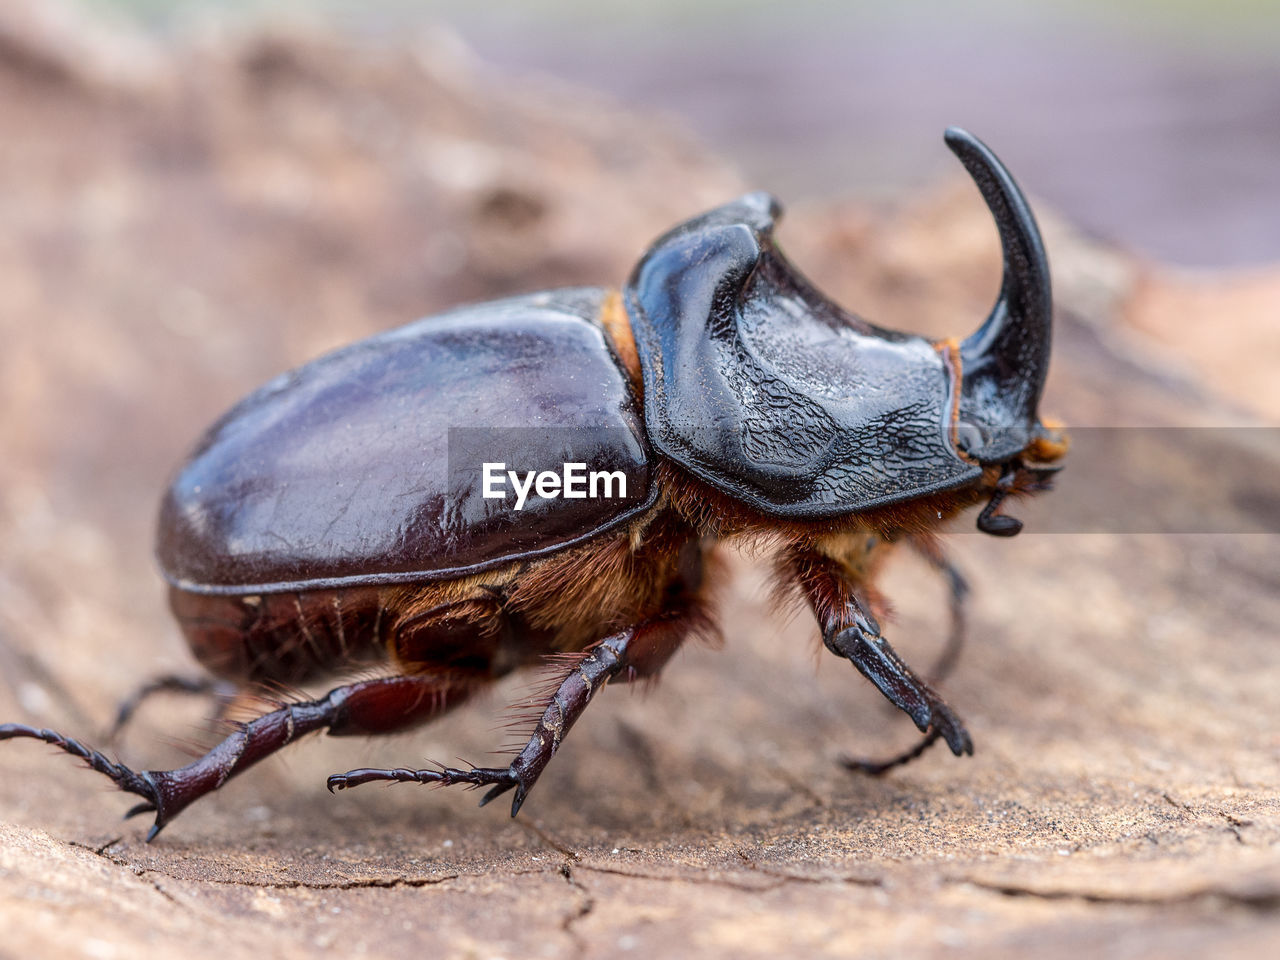 Close-up of rhino beetle